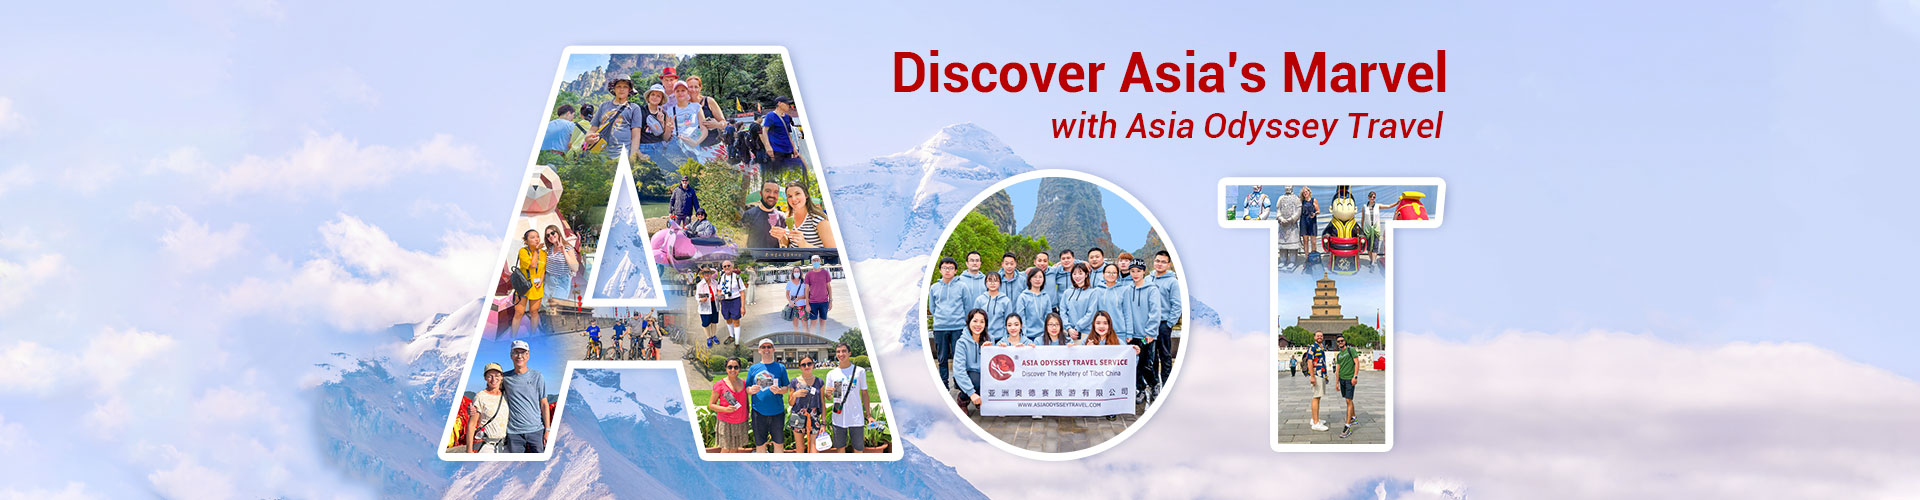 Asia Odyssey Travel Team